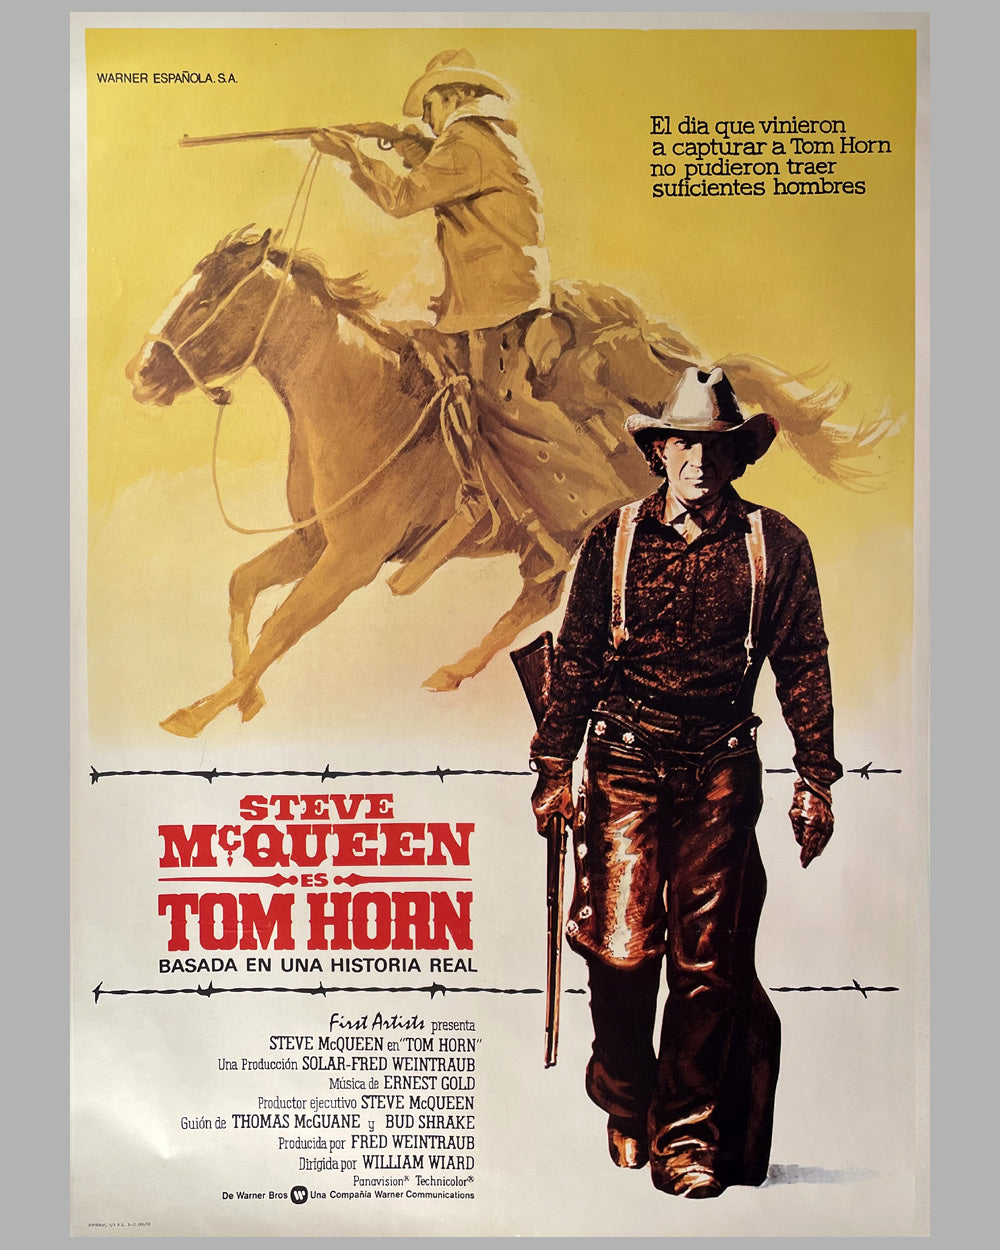 Tom Horn movie poster featuring Steve McQueen as a frontiersman, 1980